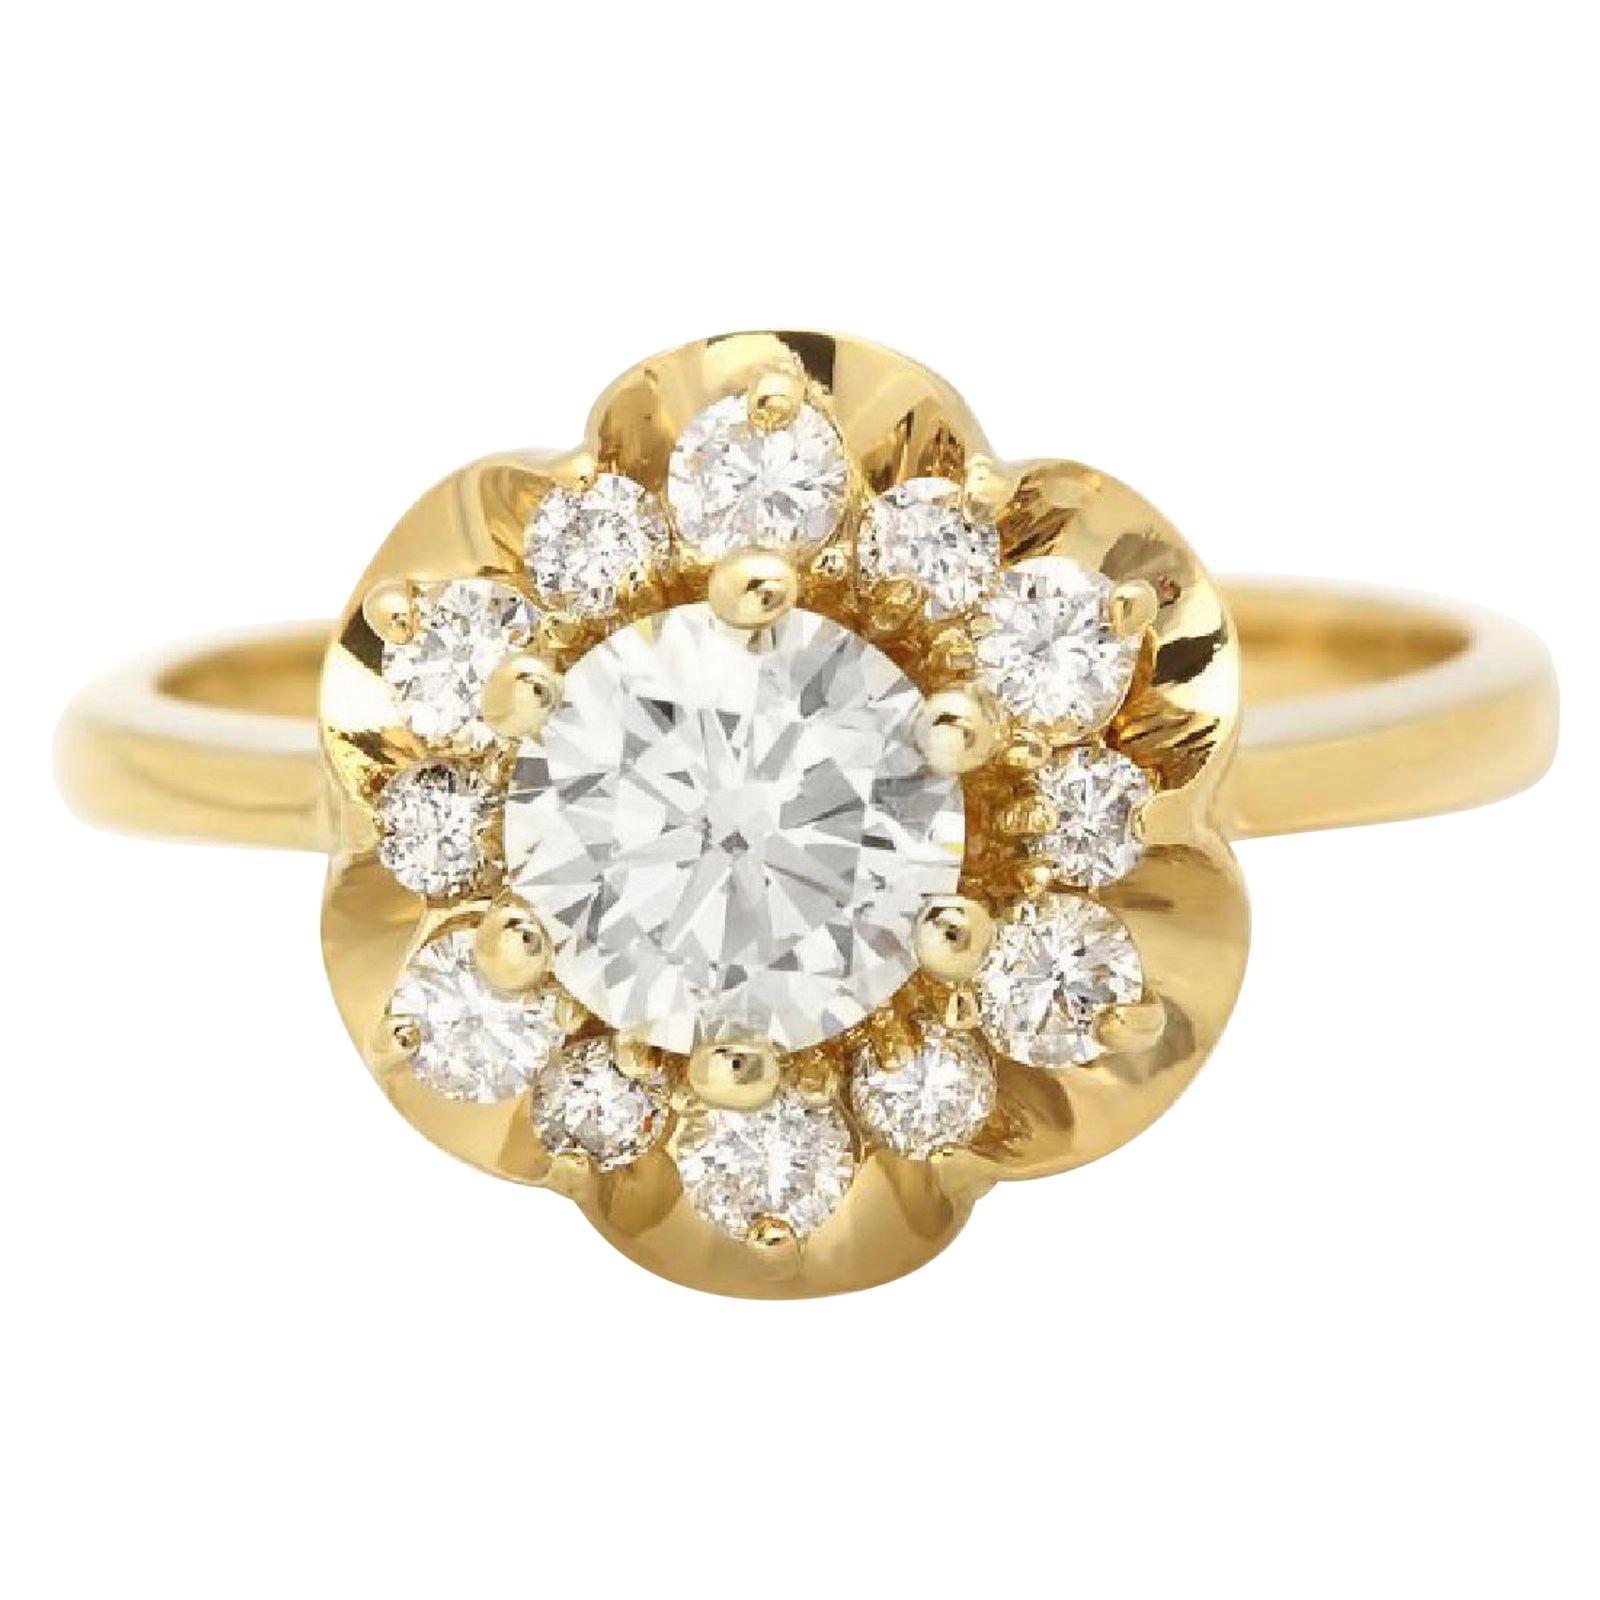 Splendid 1.15 Carat Natural Diamond 14 Karat Solid Yellow Gold Ring